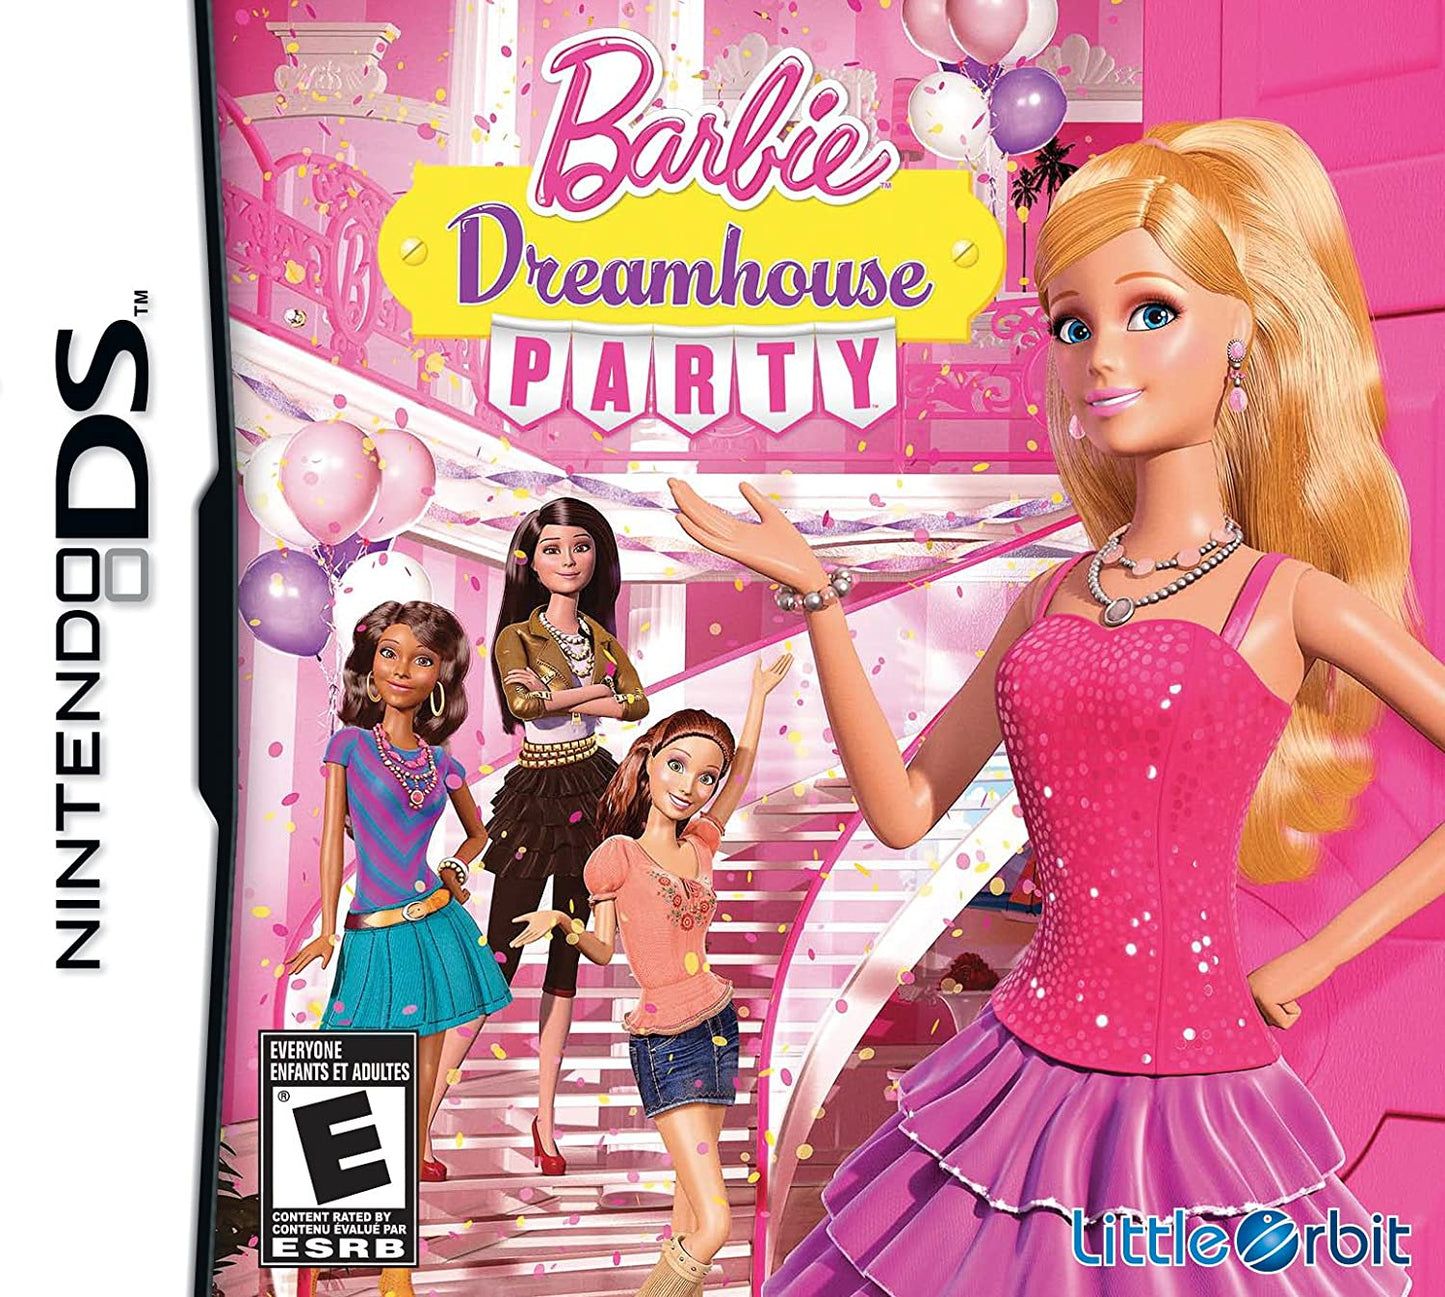 Nintendo DS Toys Nintendo DS - Barbie Dream-house Party